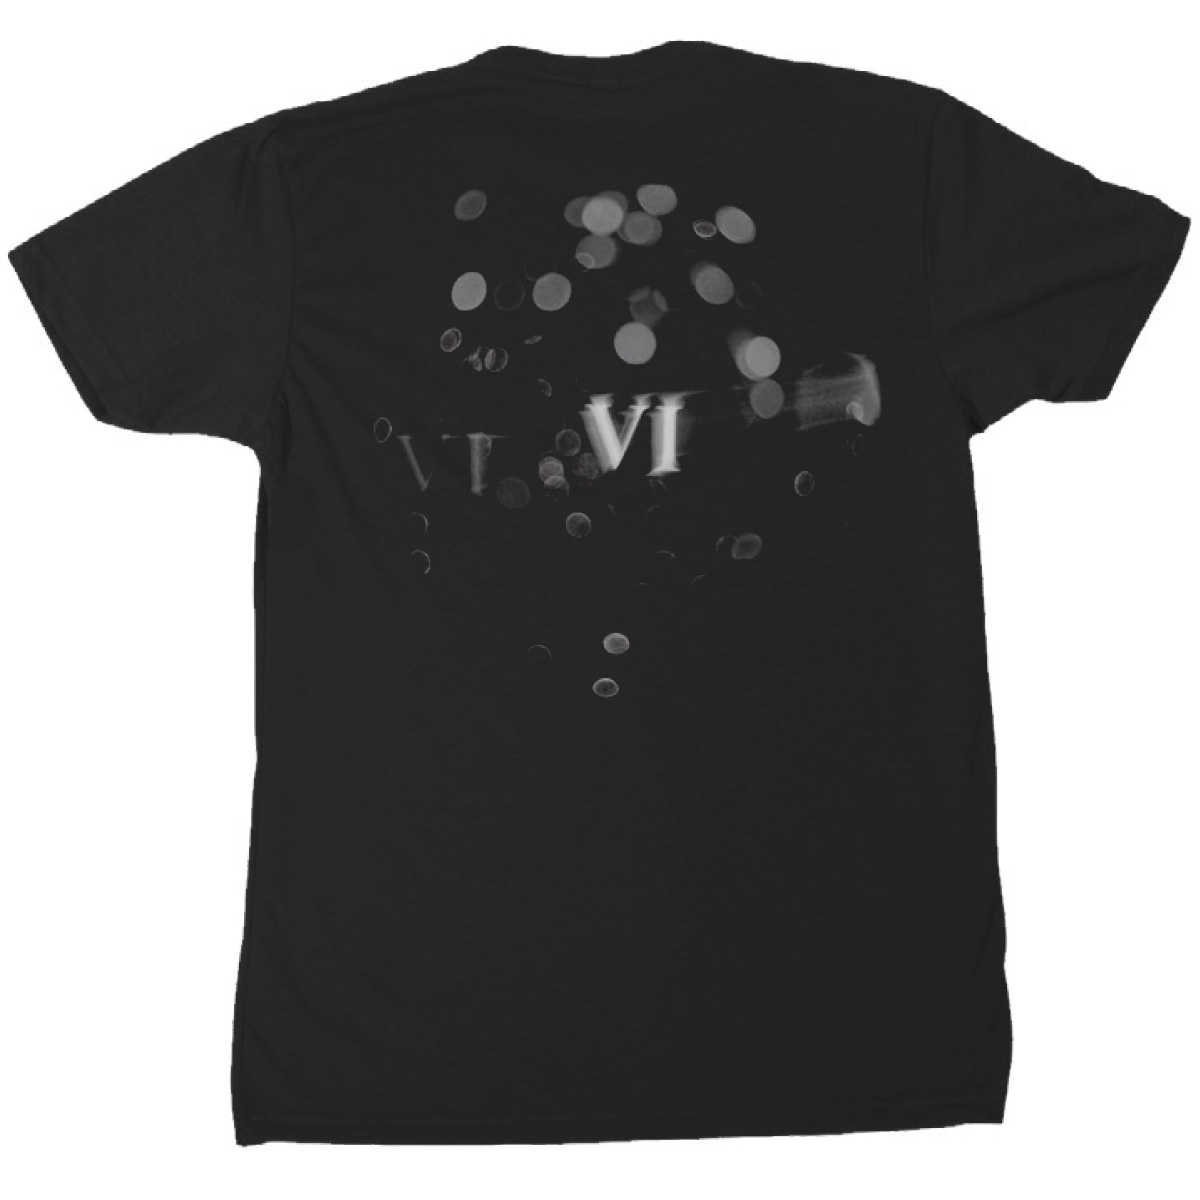 Static VI Spectacle T-Shirt Black